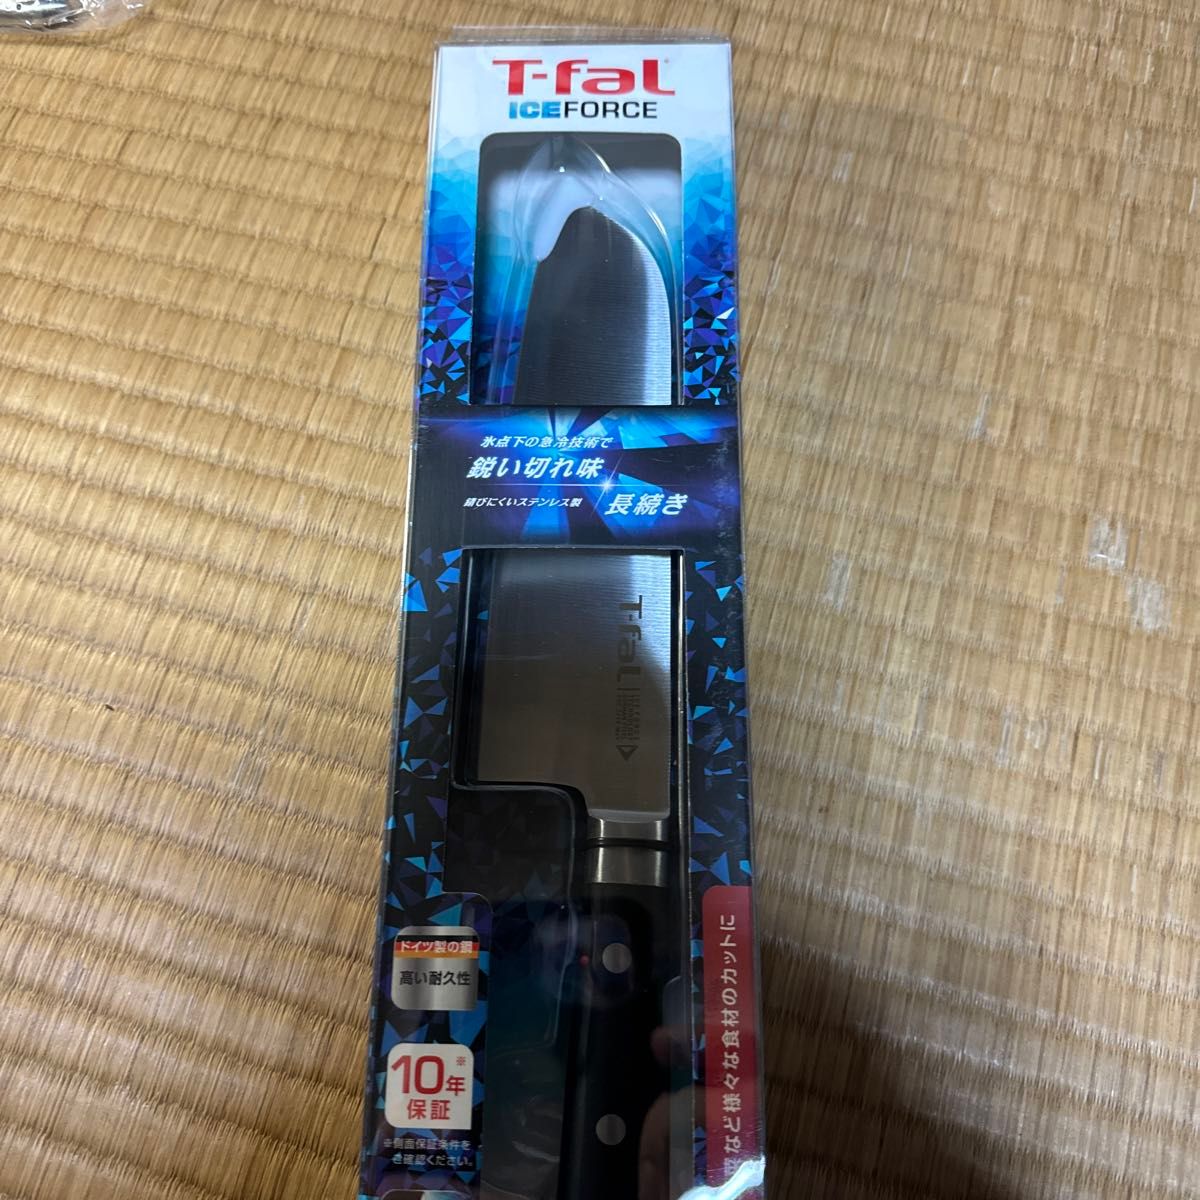 T-fal アイスフォース 三徳ナイフ 16.5cm K24211